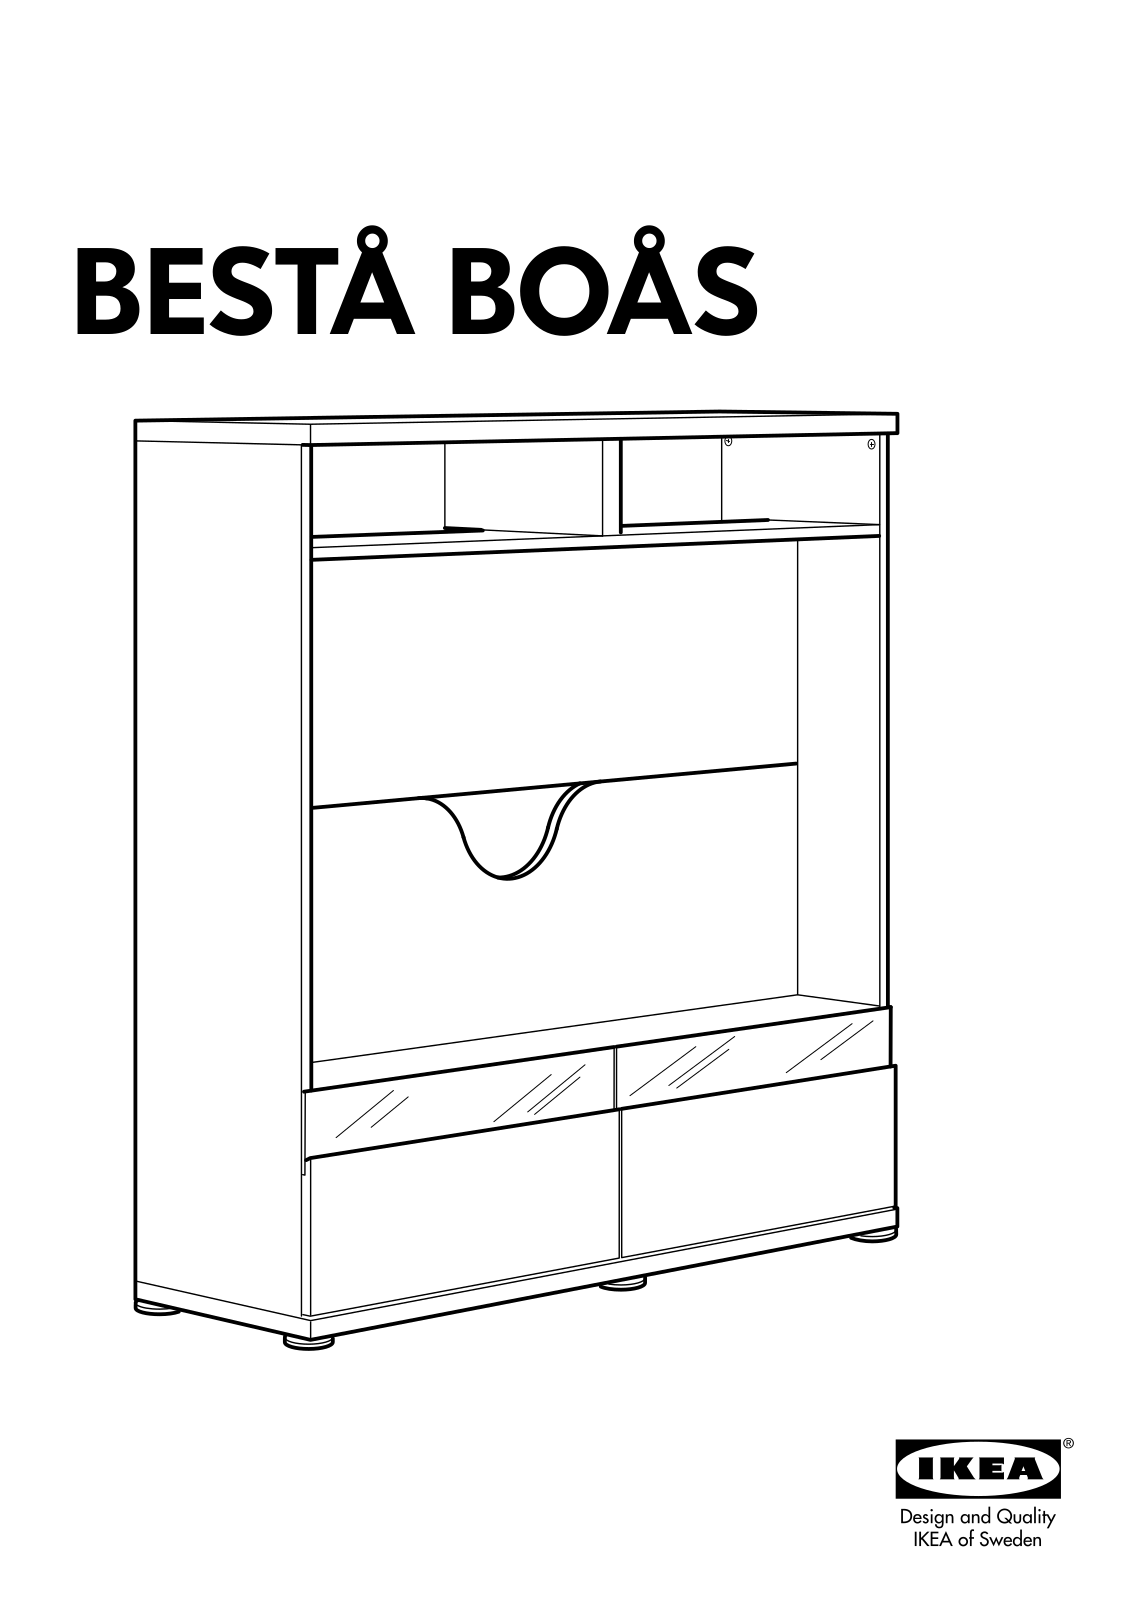 IKEA BESTÅ BOAS TV STORAGE UNIT User Manual